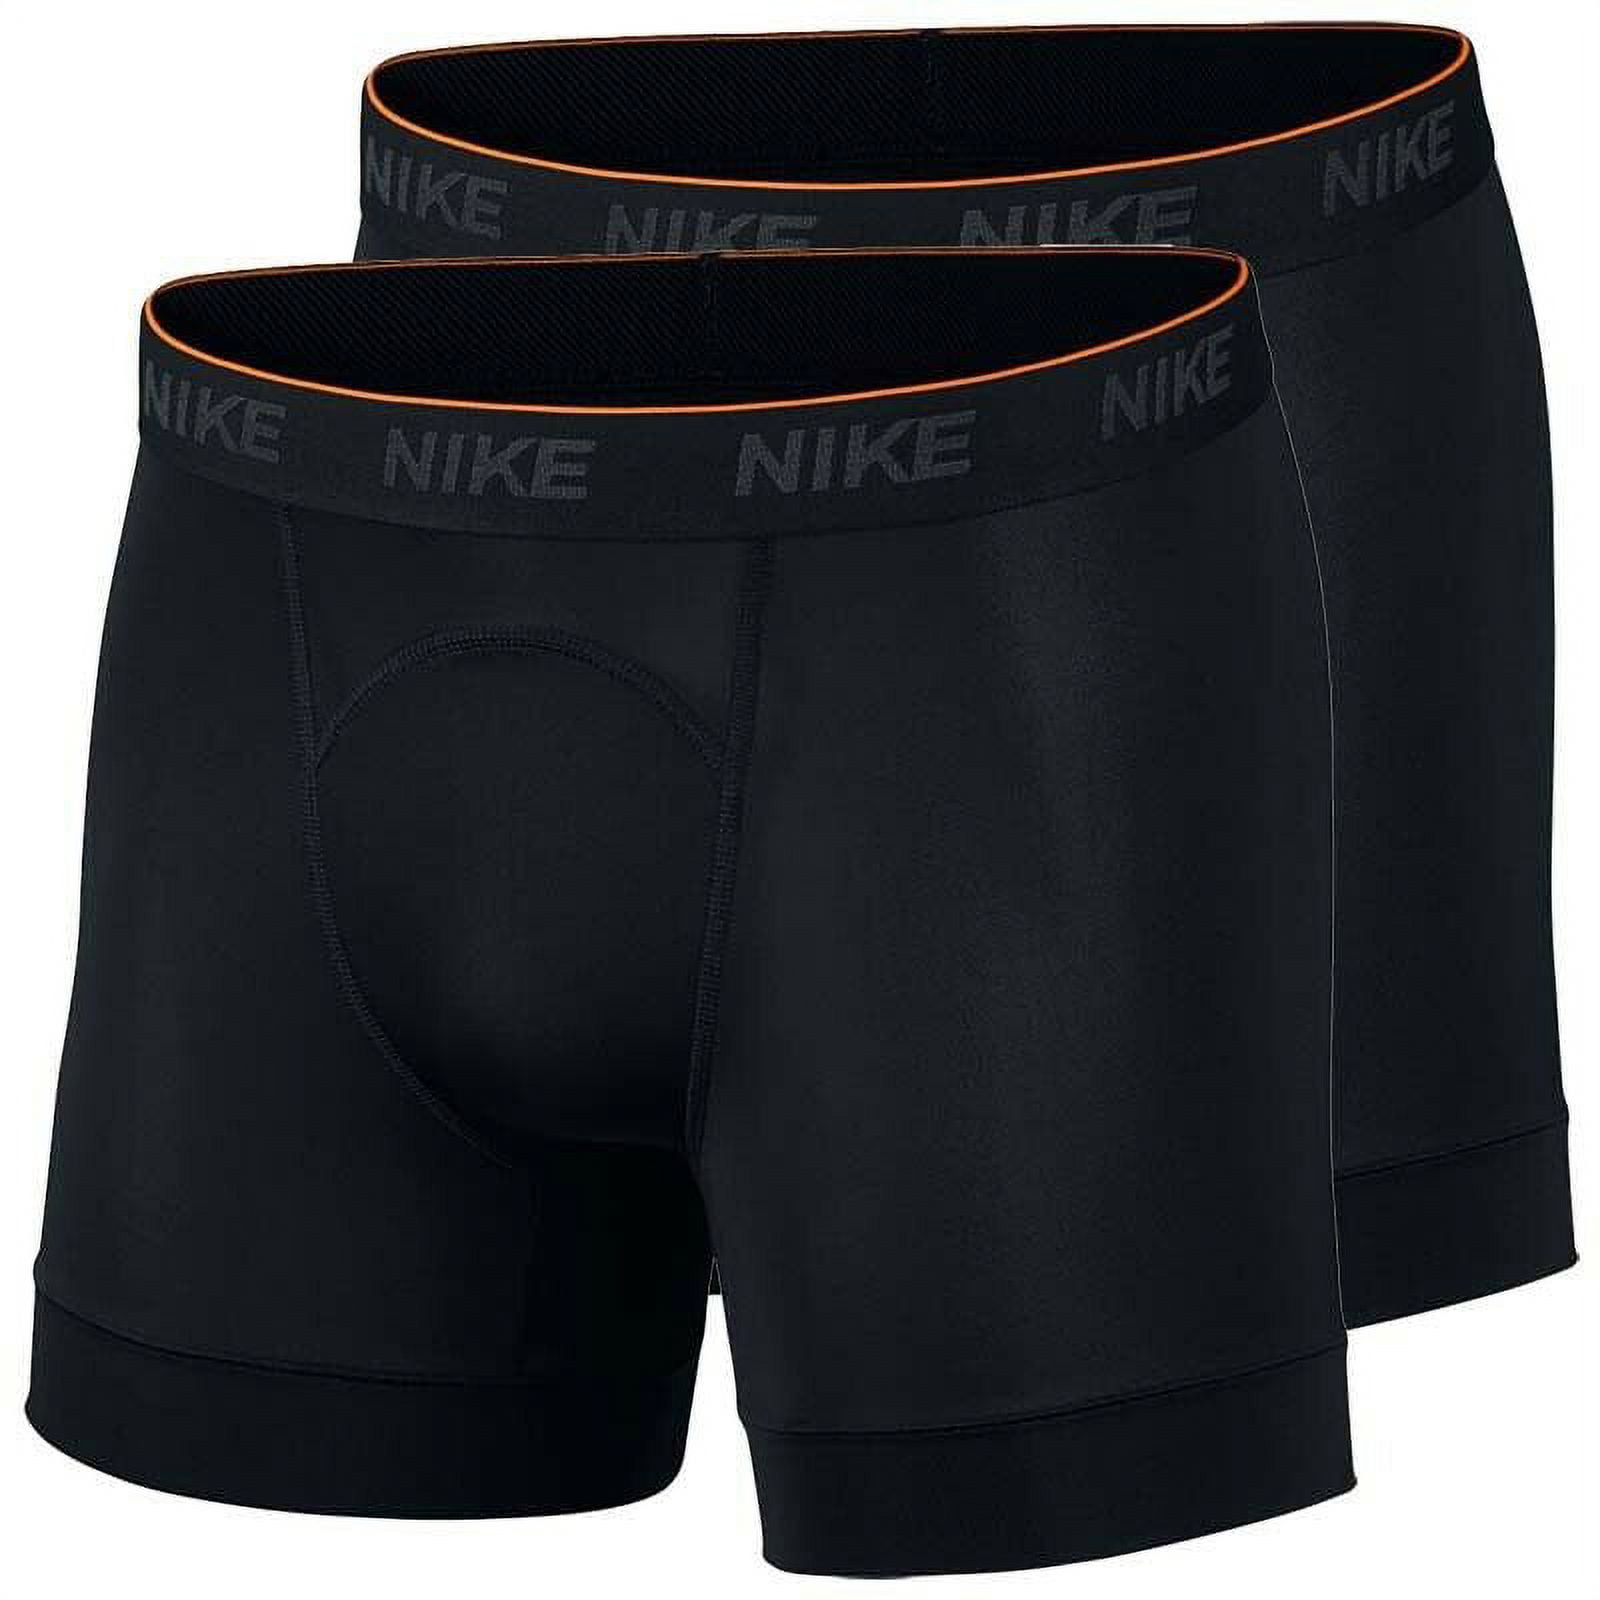 Forskelle ordningen badning Nike Men's Training Boxer Briefs (2 Pack) AA2960-010 Black - Walmart.com